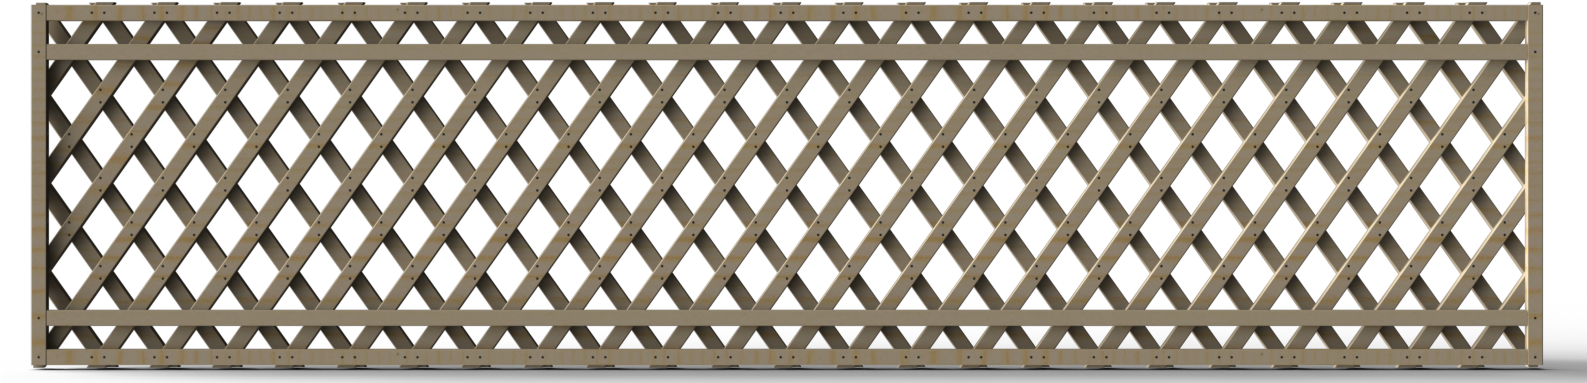 Wooden Lattice Panel PNG image